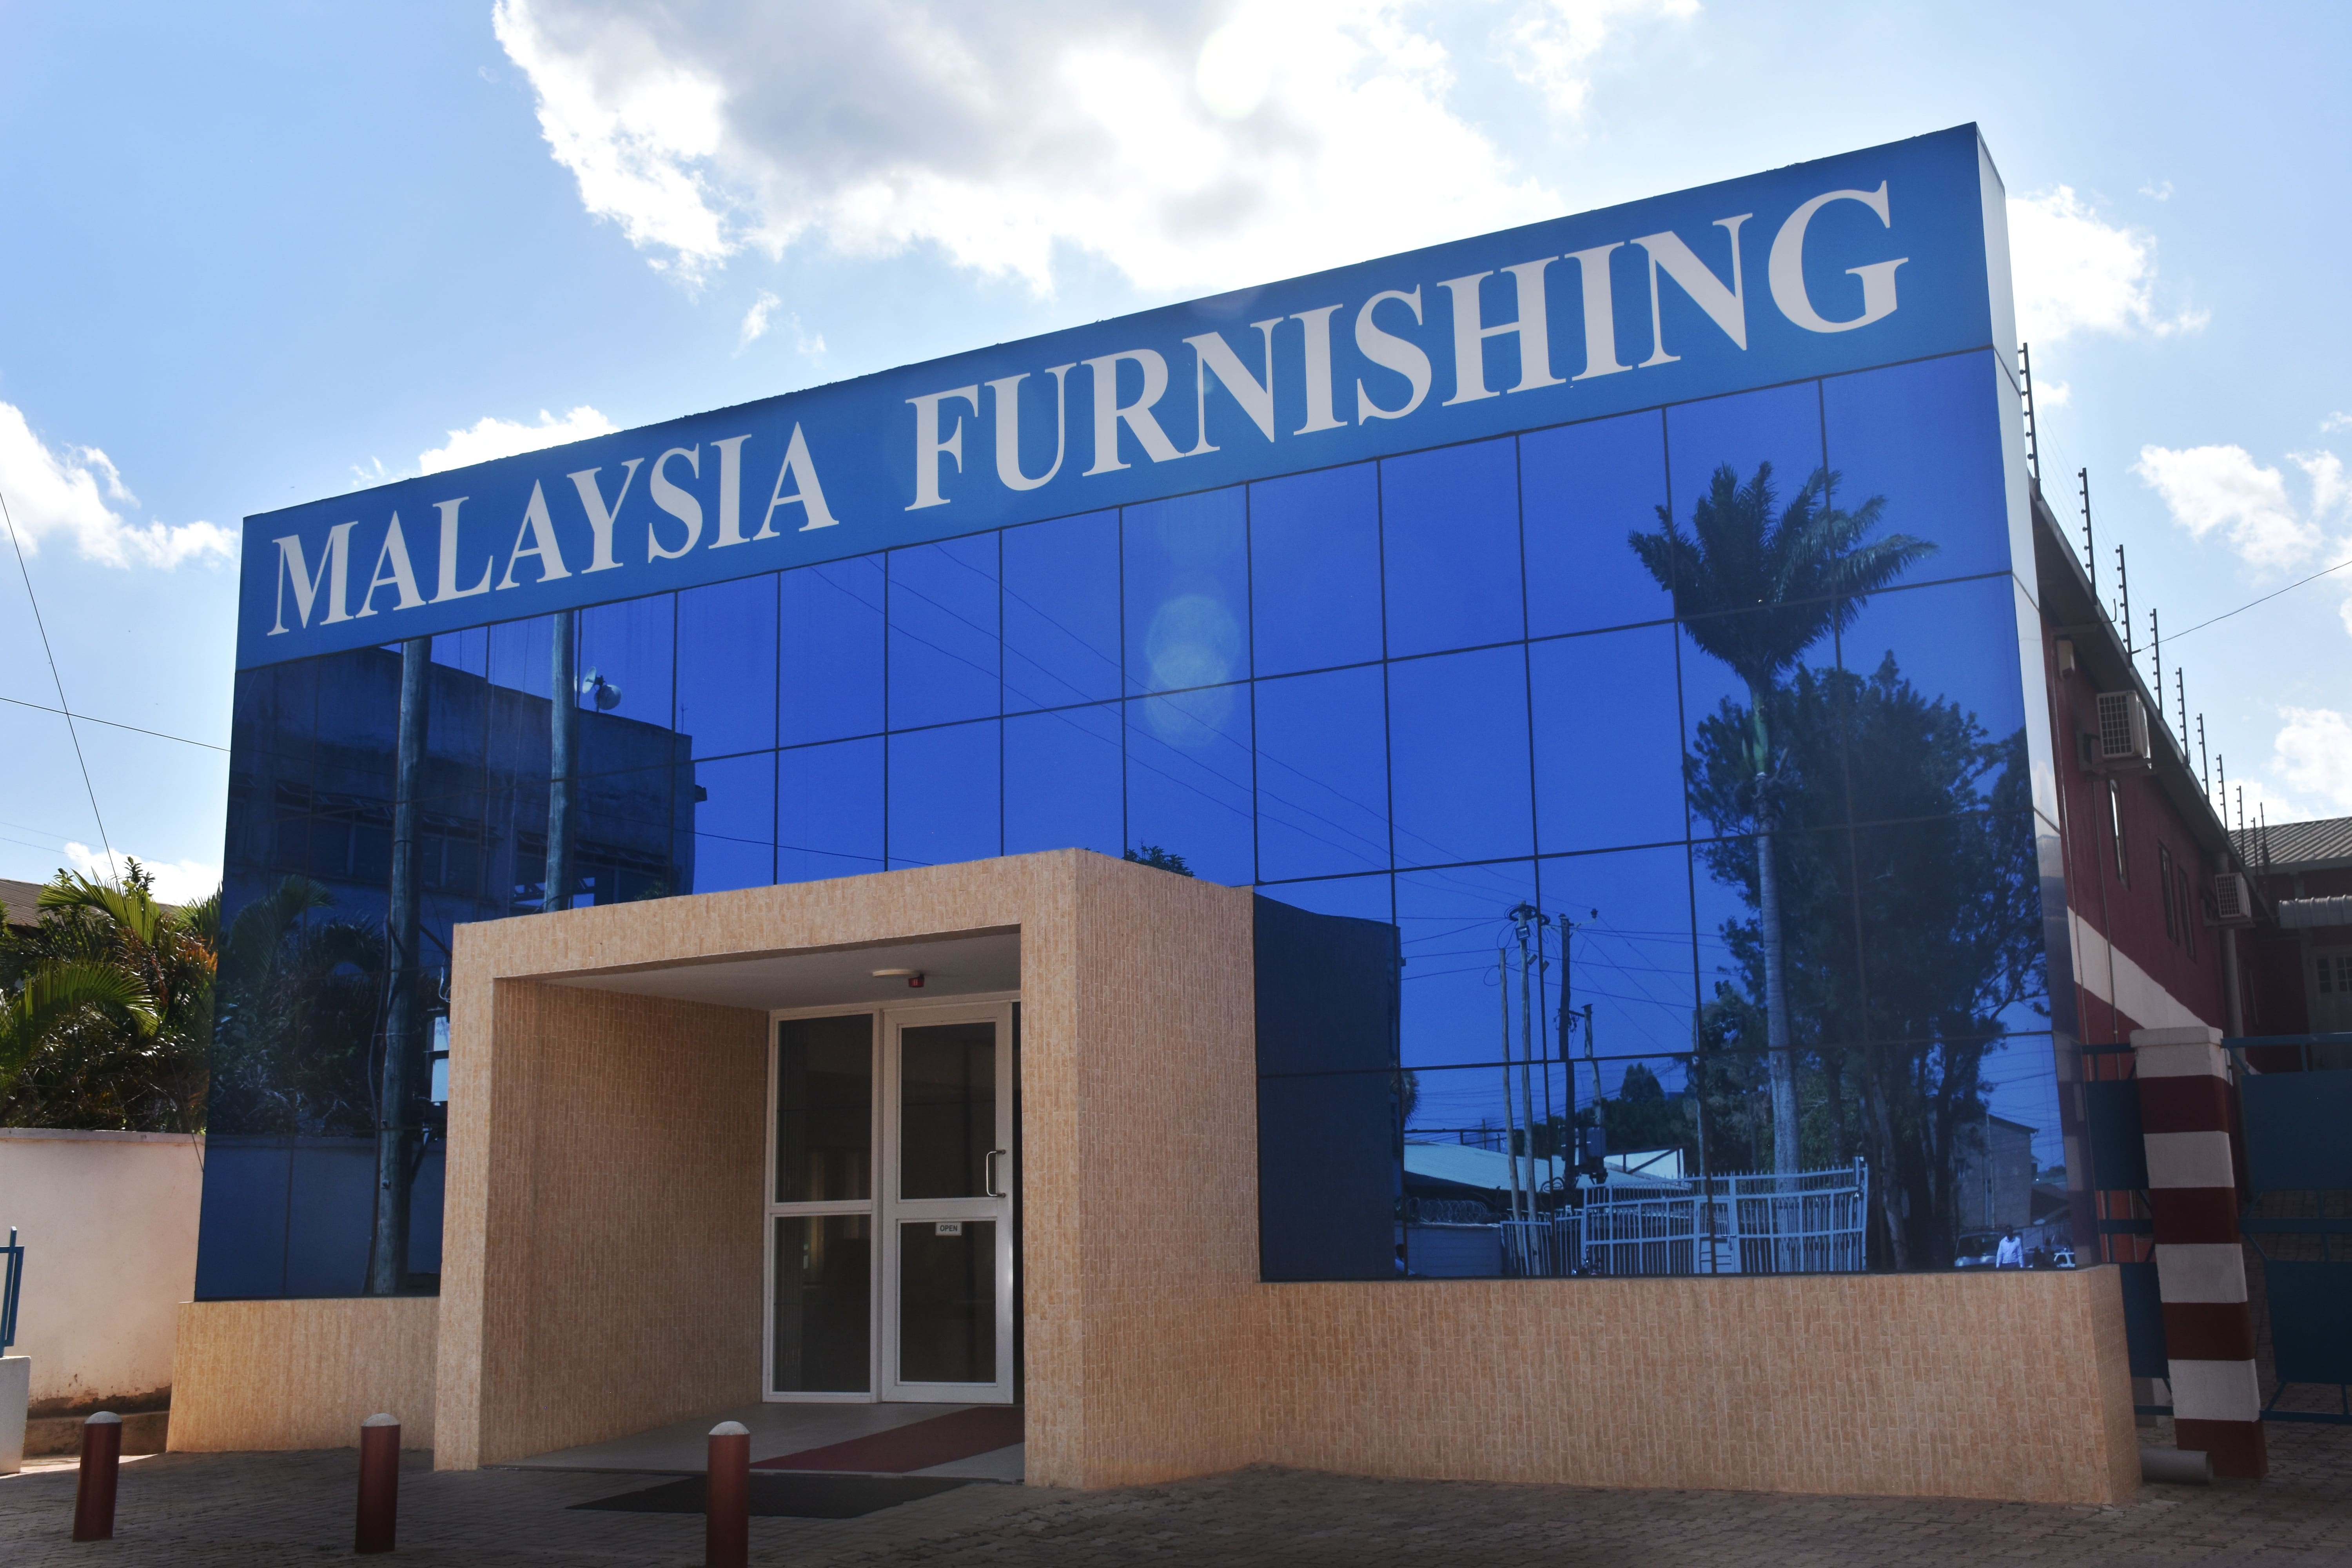 Malaysia furnishing centre building